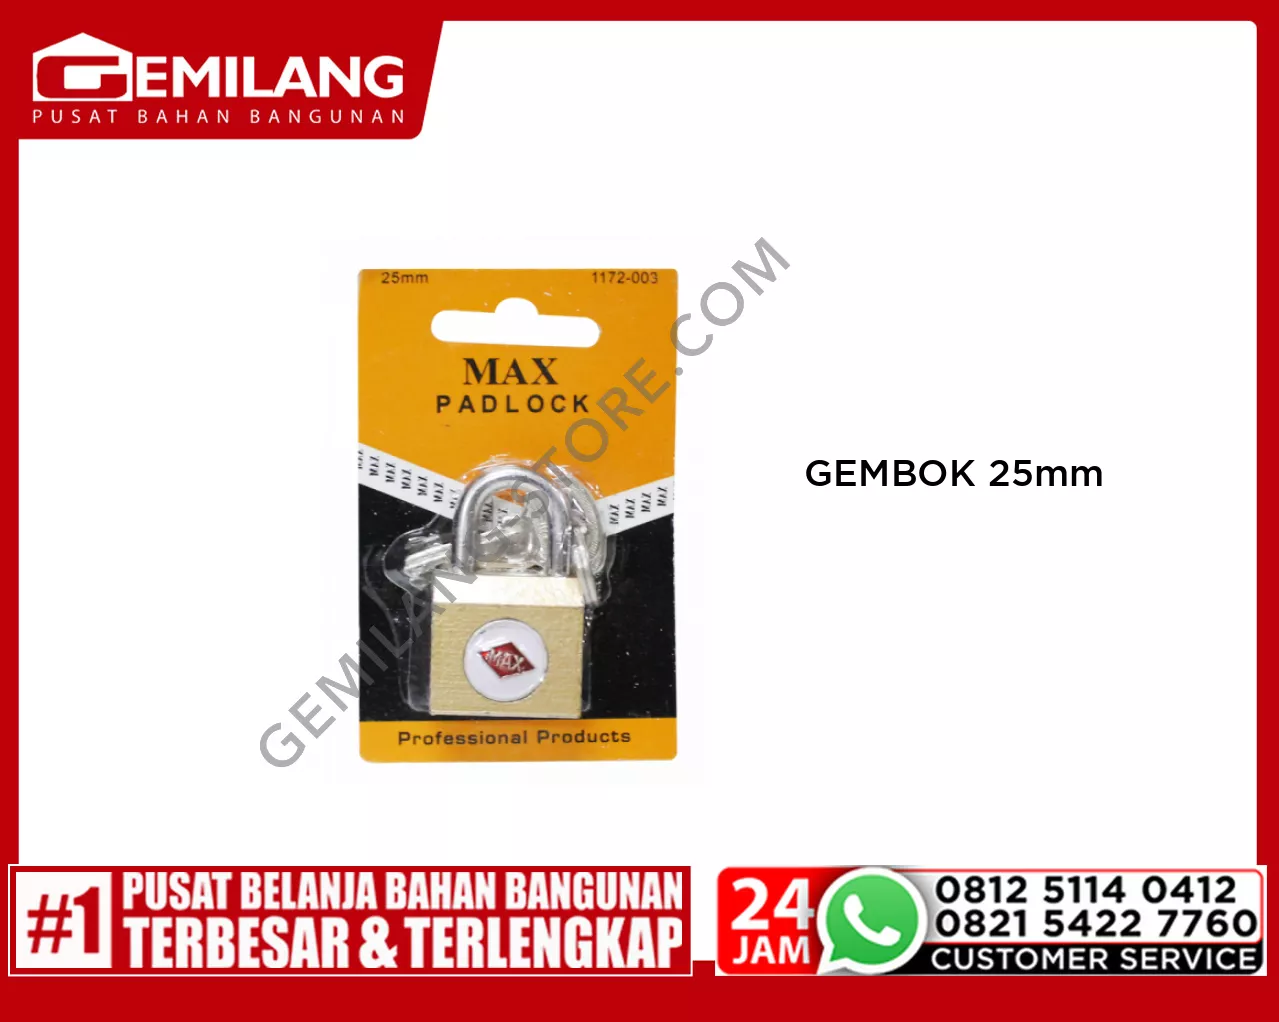 PROHEX GEMBOK KUNCI SAMPING GOLD MAX 25mm (1172-003)